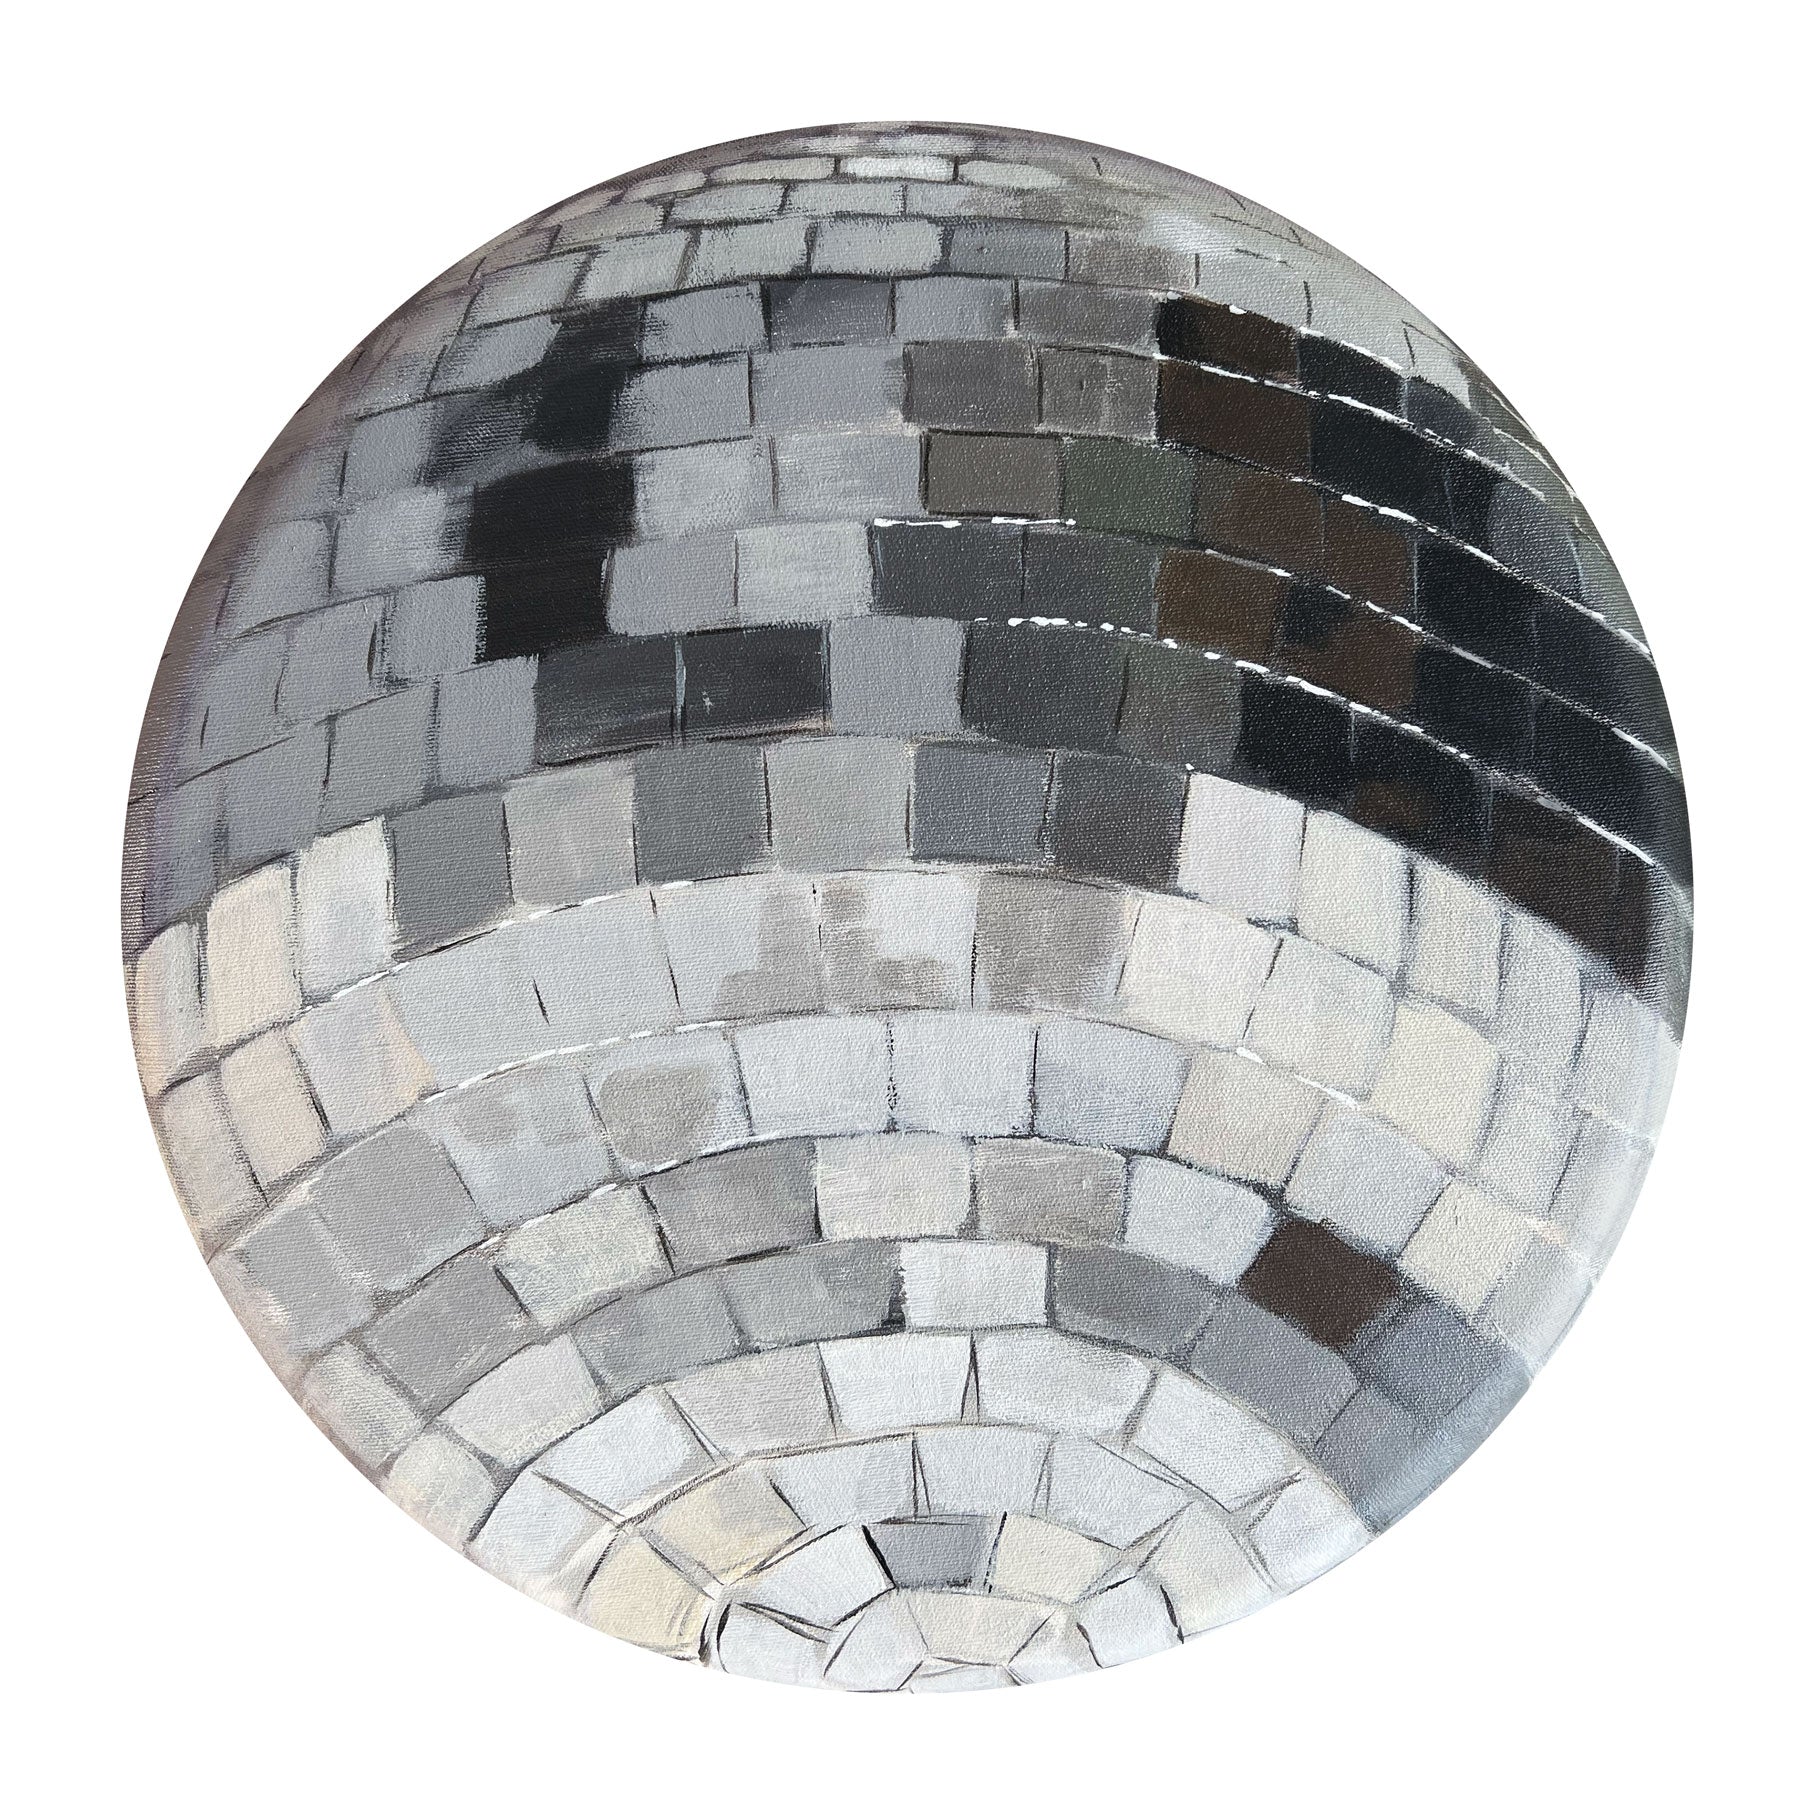 Disco Ball Acrylic Wall Art